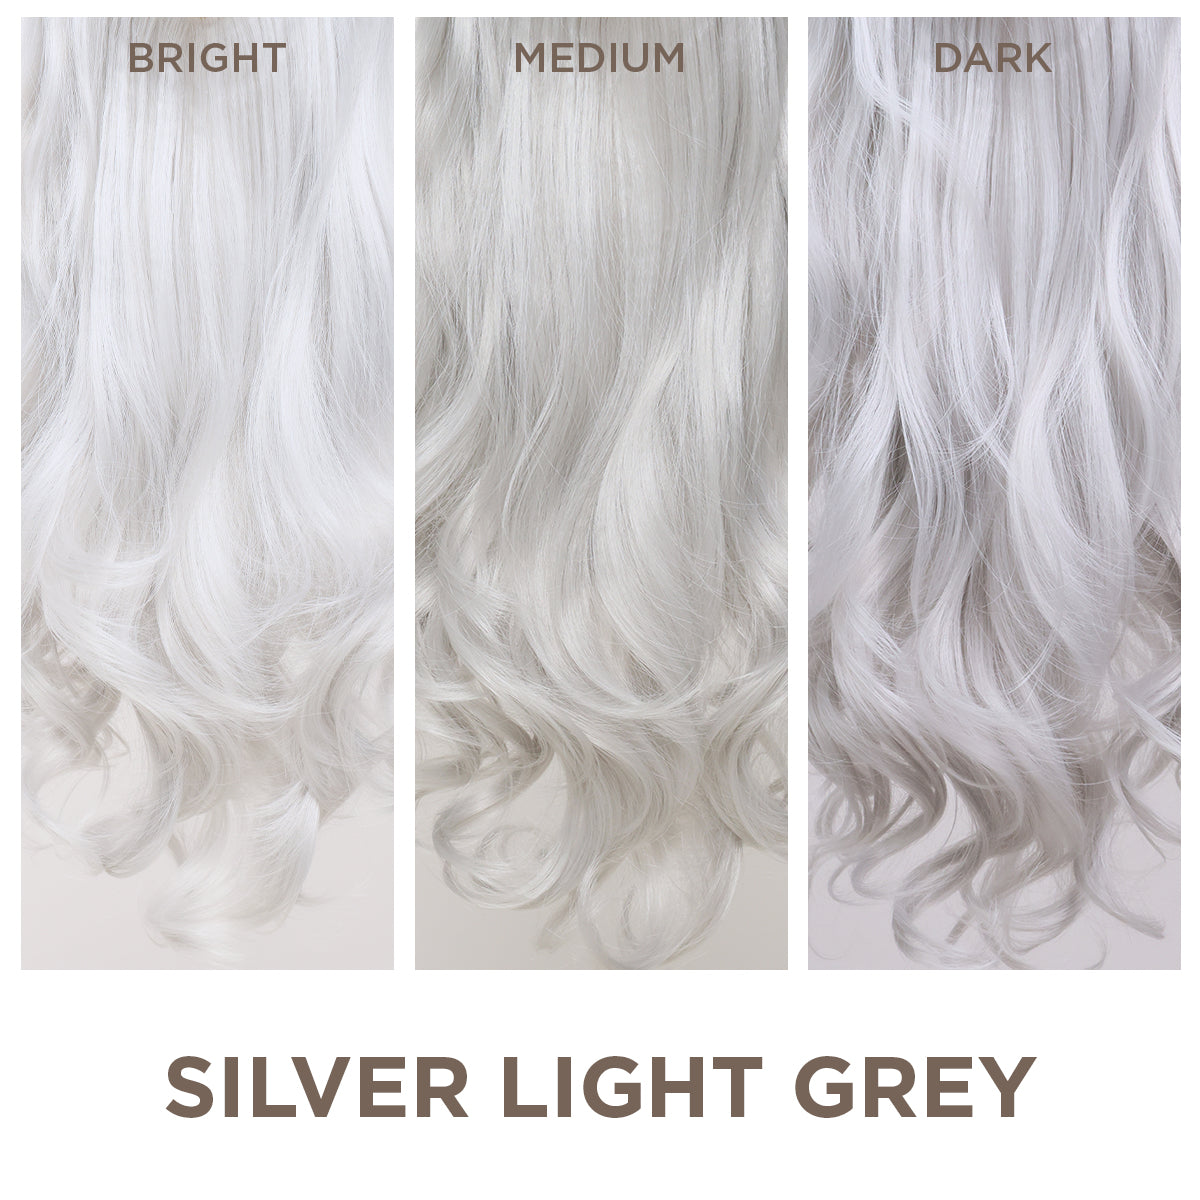 Silver Light Grey + 1 FREE HALO